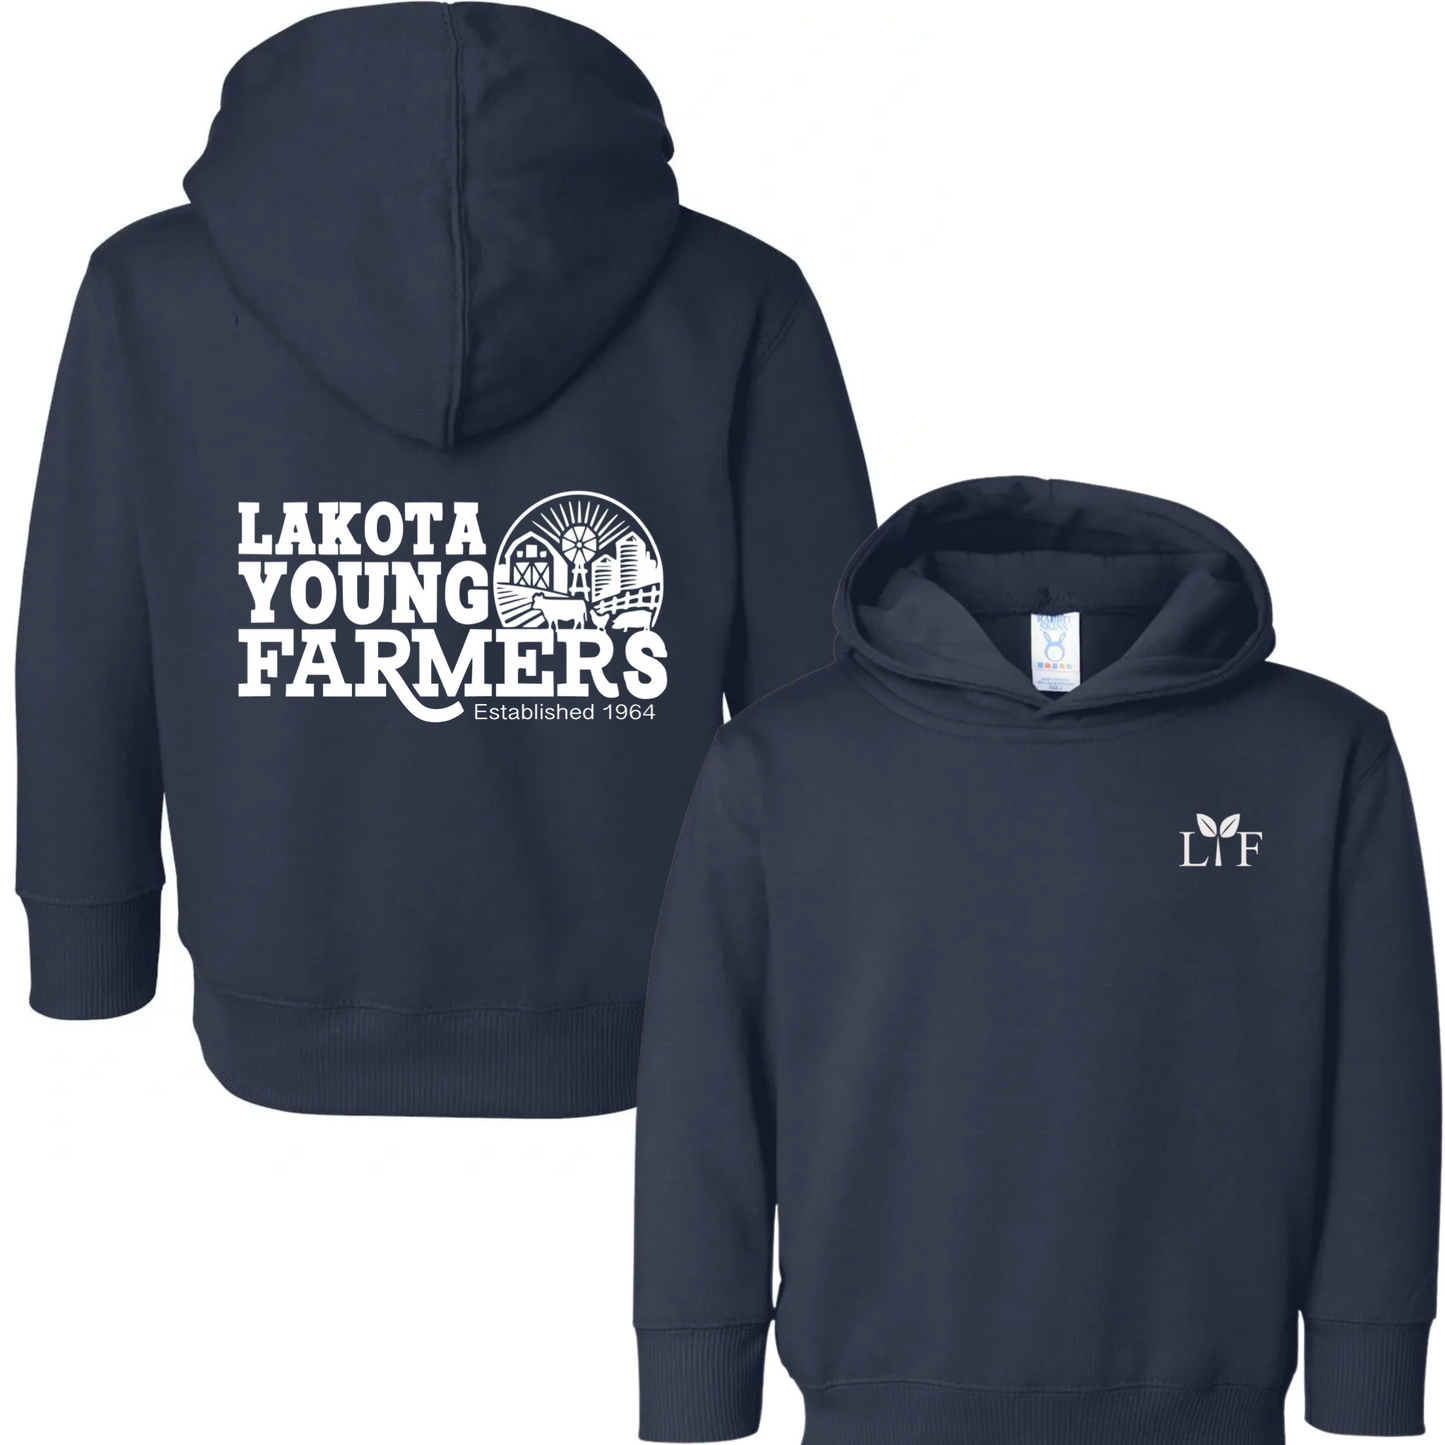 Lakota Young Farmers Youth Size Hoodies and Sweatshirts